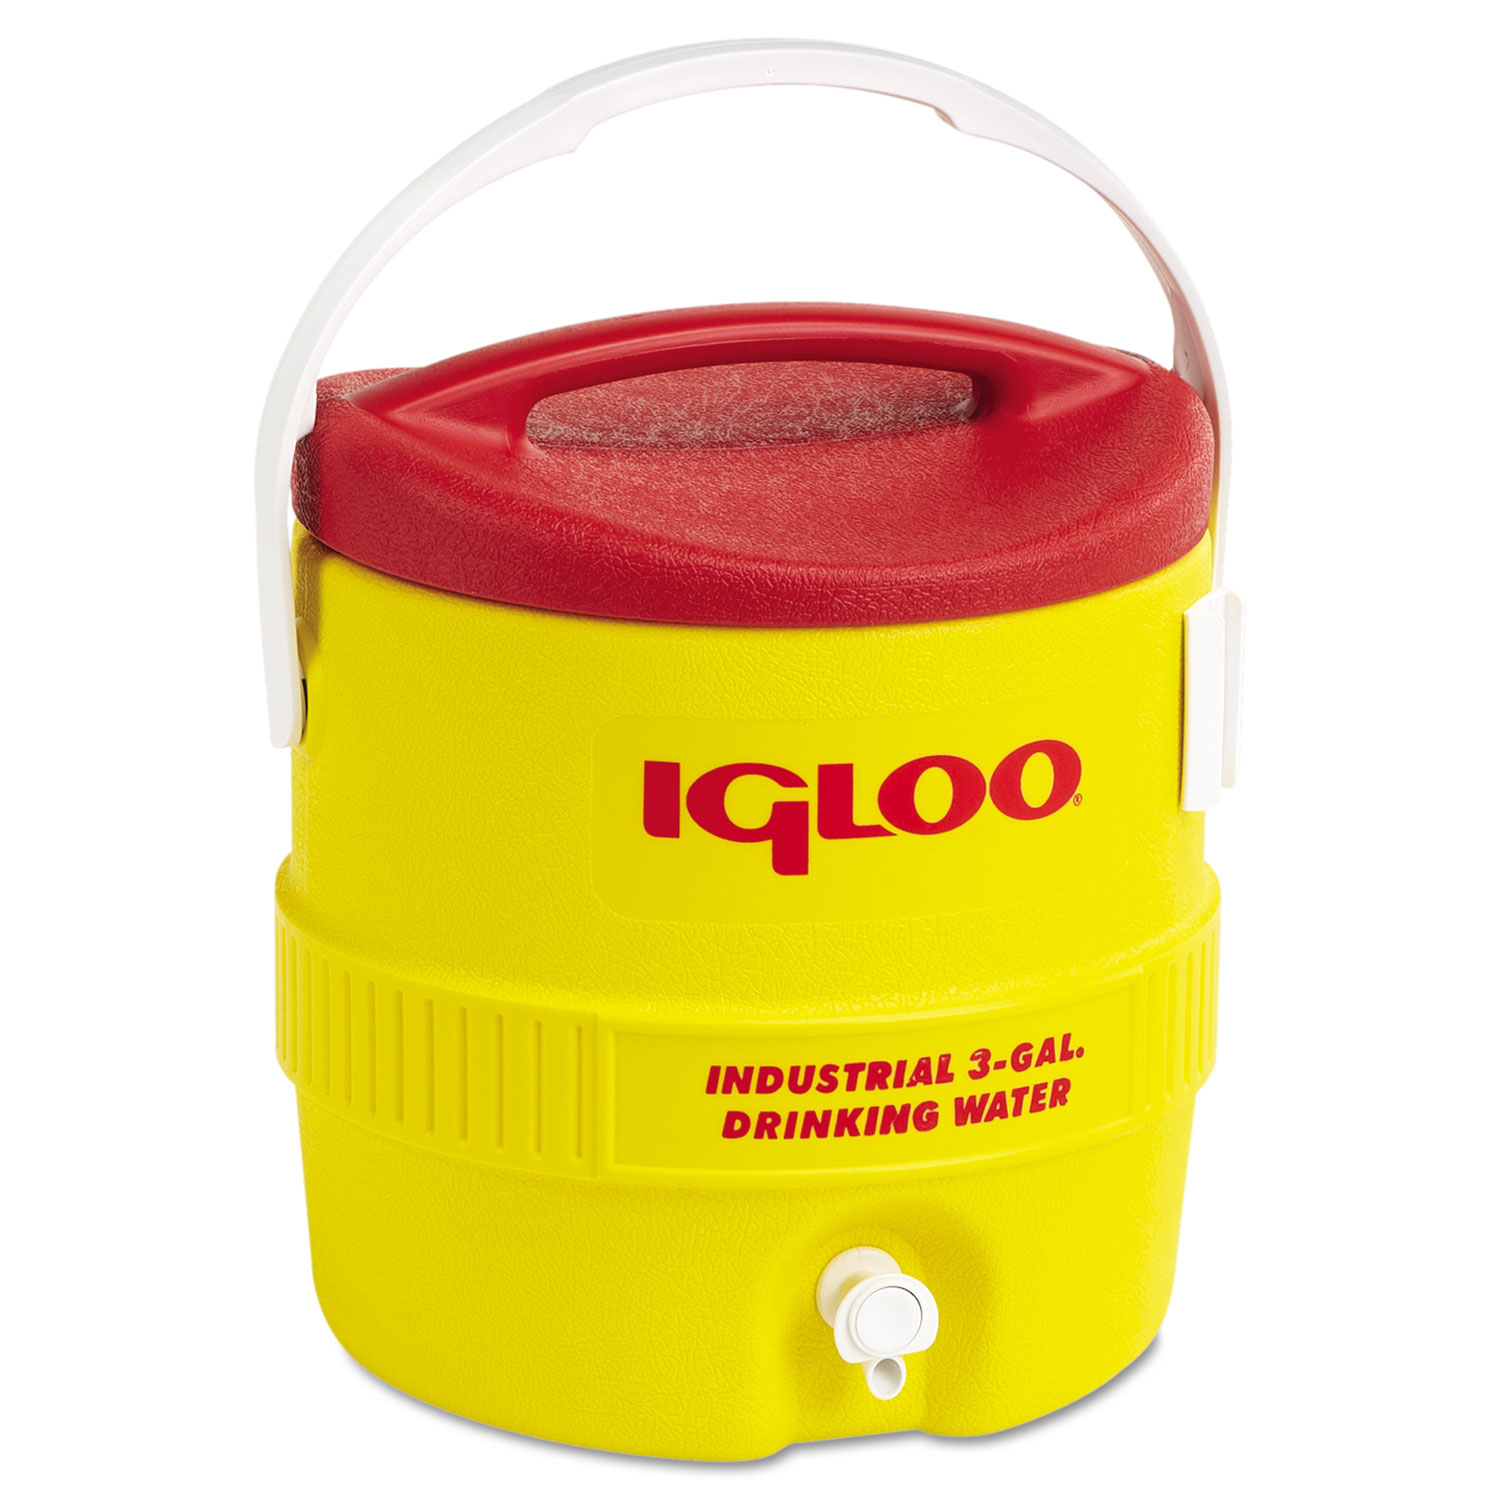  Igloo 431 Industrial Water Cooler, 3 gal, Yellow Red (IGL431) 